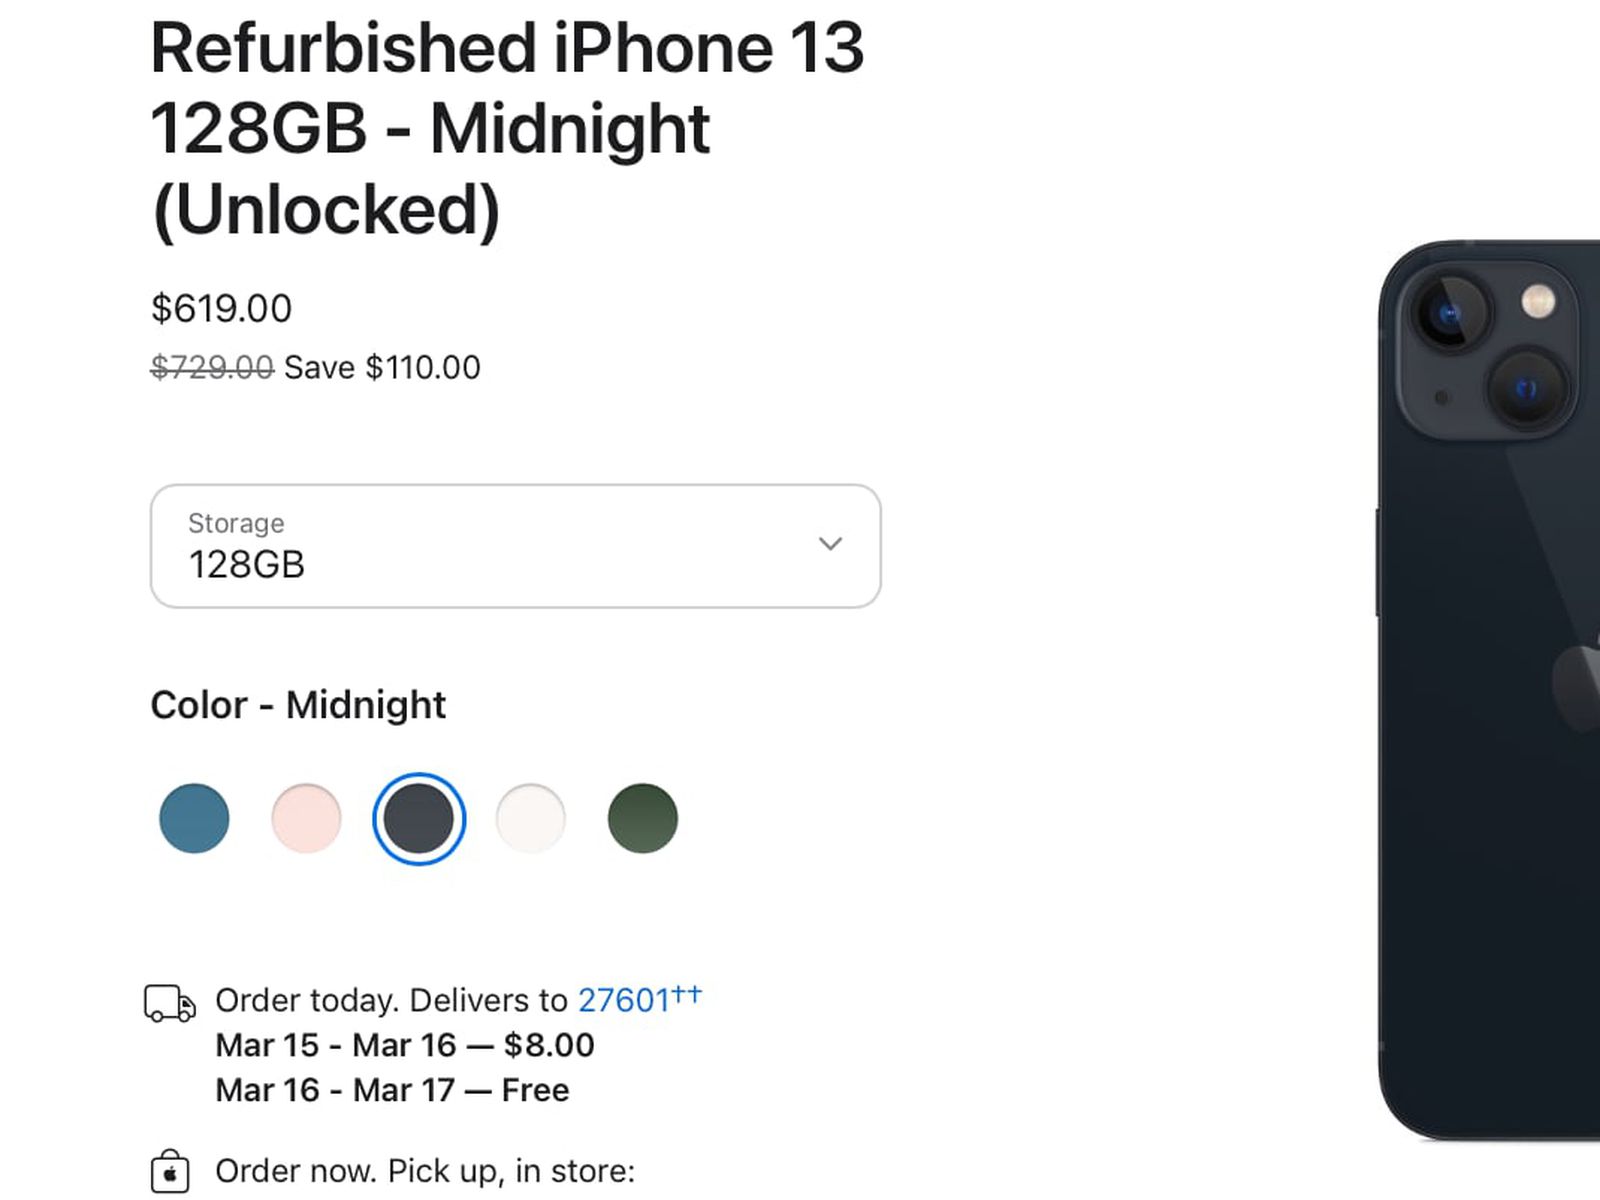 iPhone 13 mini 128GB Blue - Refurbished product